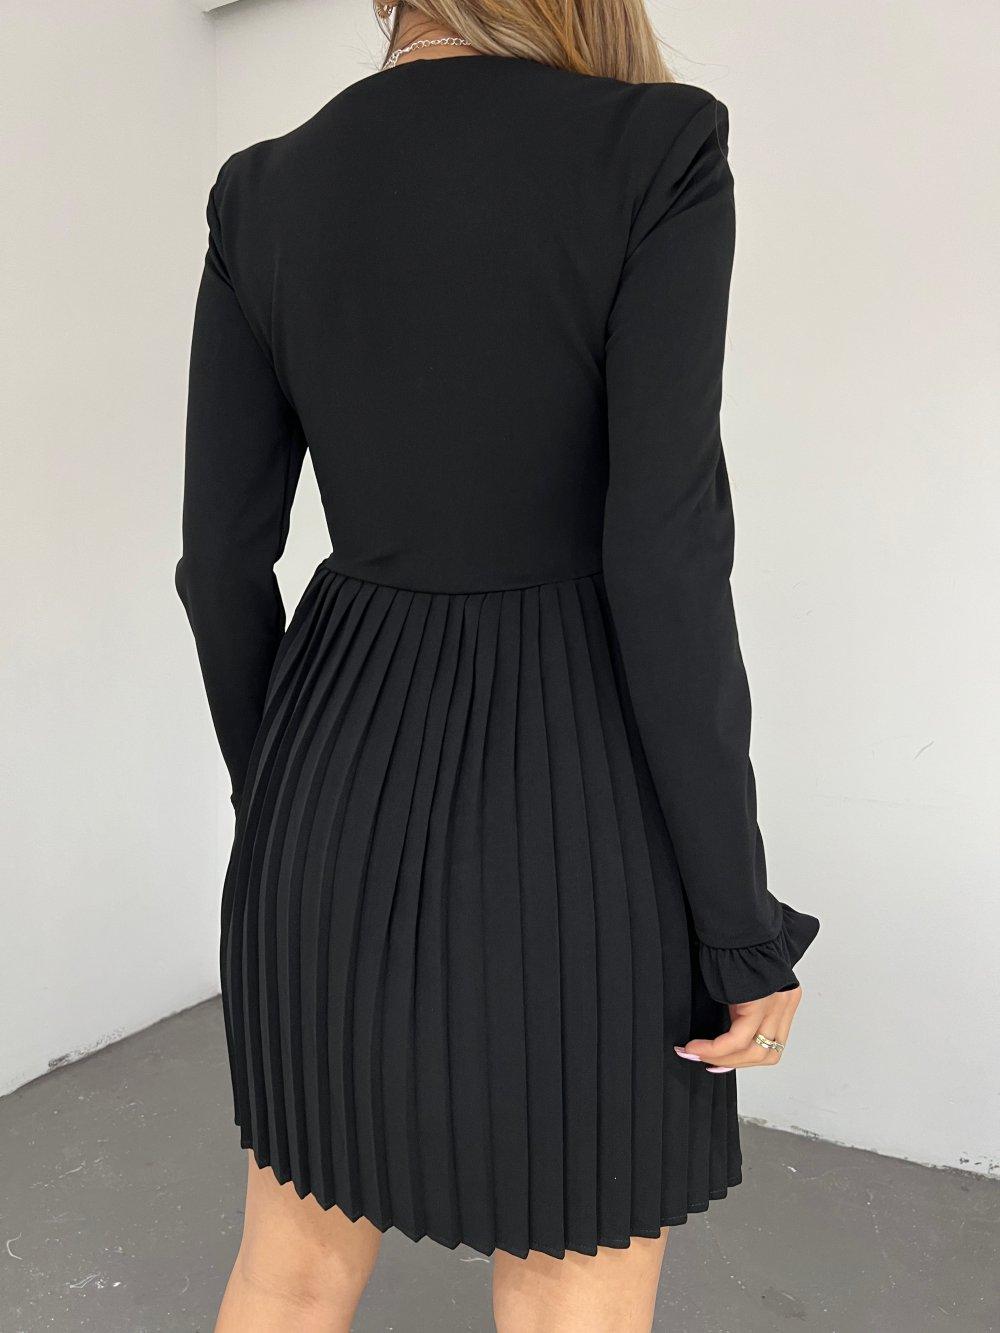 Ön Detay Etek Pileli Elbise 3774 Siyah